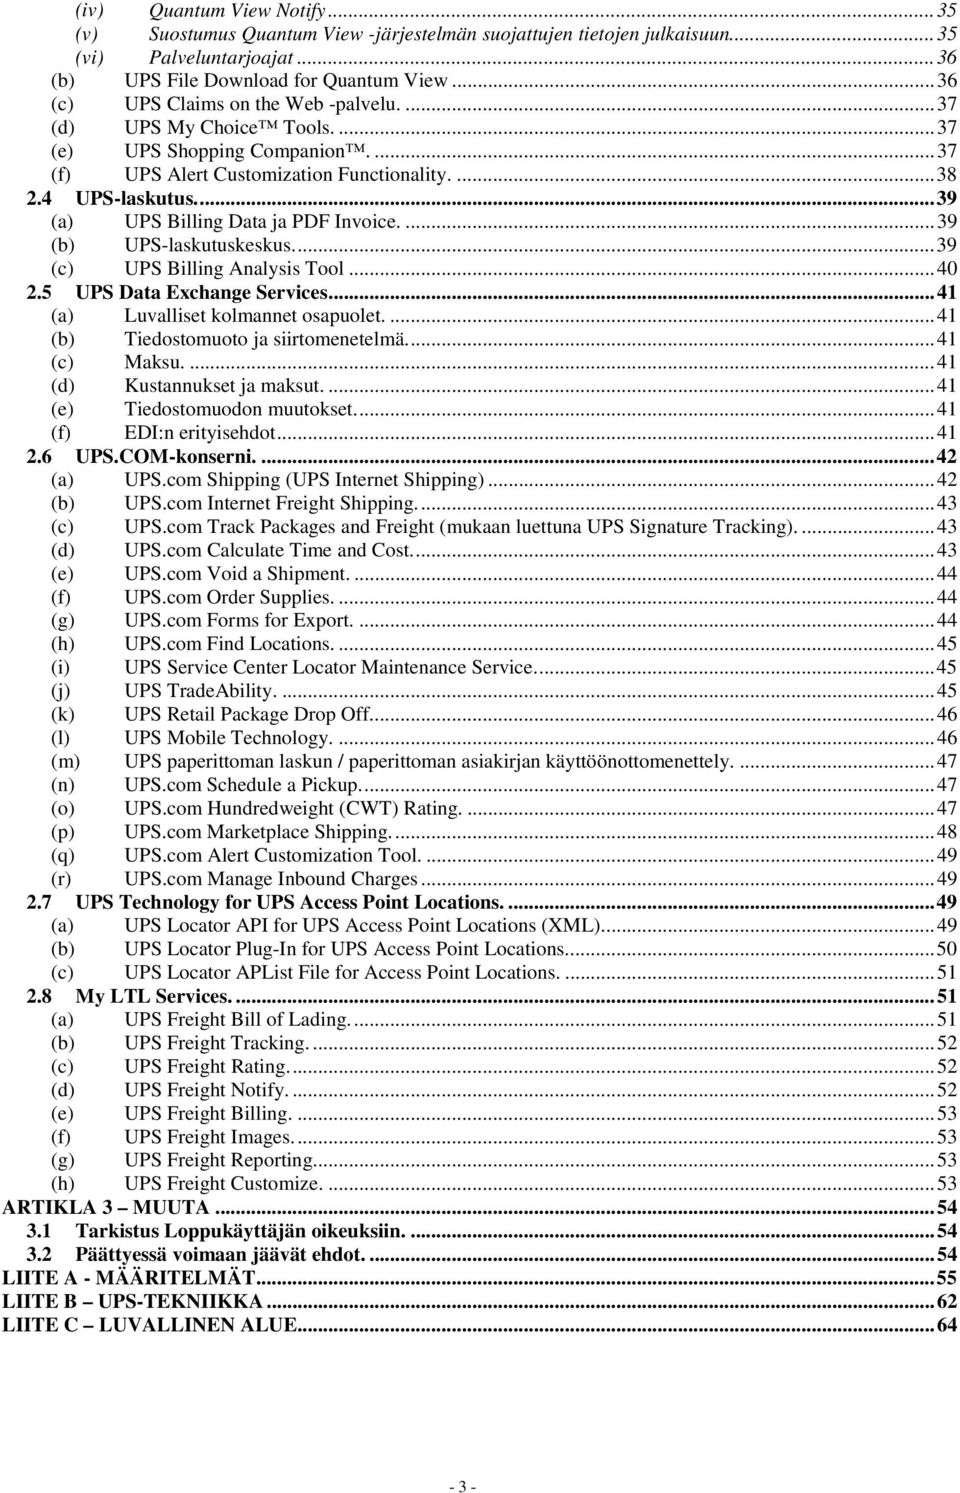 ... 39 (a) UPS Billing Data ja PDF Invoice.... 39 (b) UPS-laskutuskeskus.... 39 (c) UPS Billing Analysis Tool... 40 2.5 UPS Data Exchange Services... 41 (a) Luvalliset kolmannet osapuolet.